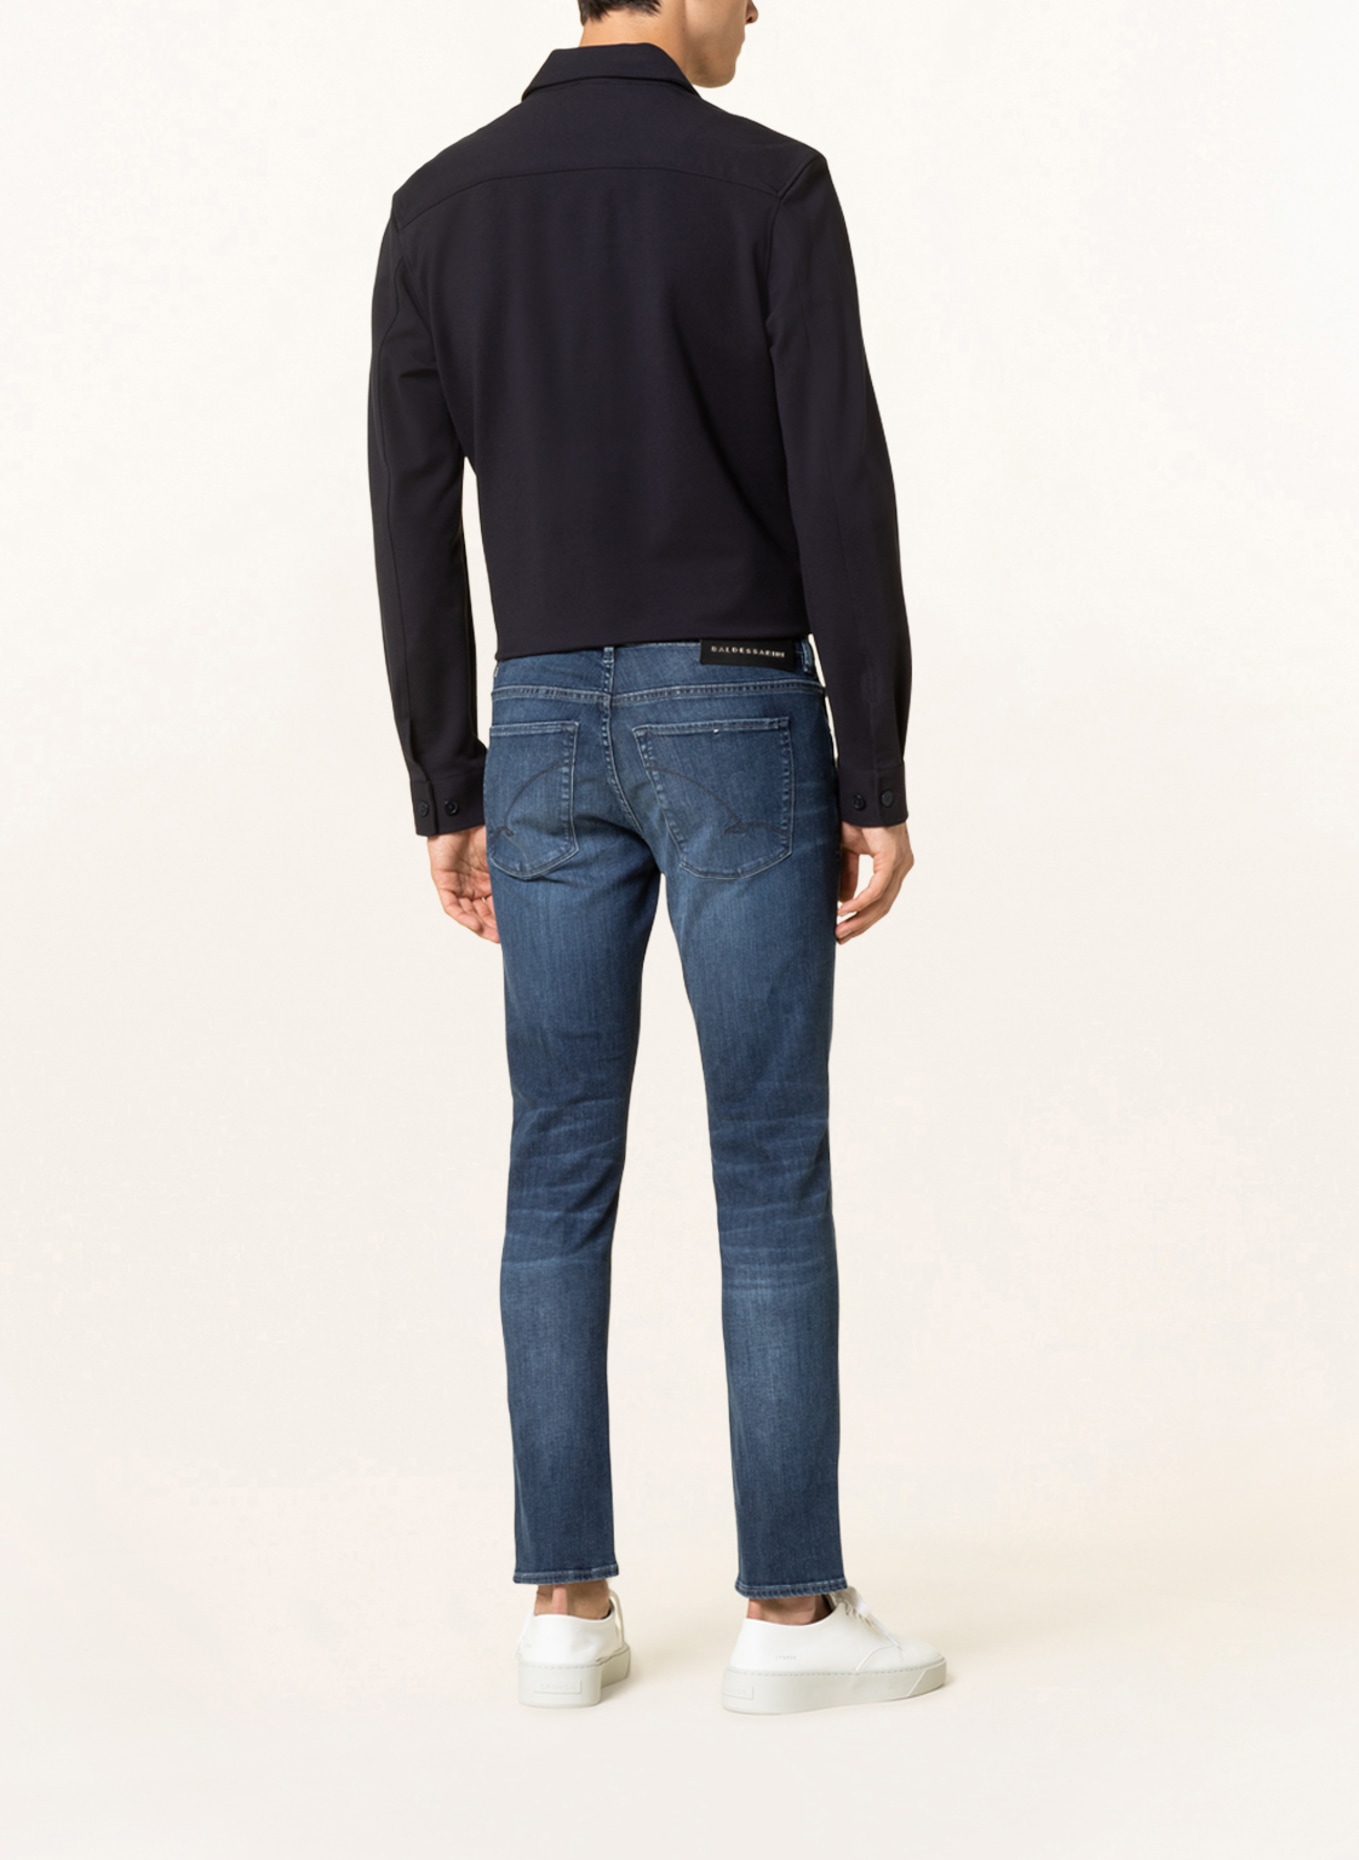 BALDESSARINI Jeans Slim Fit, Farbe: 6836 blue used buffies (Bild 3)